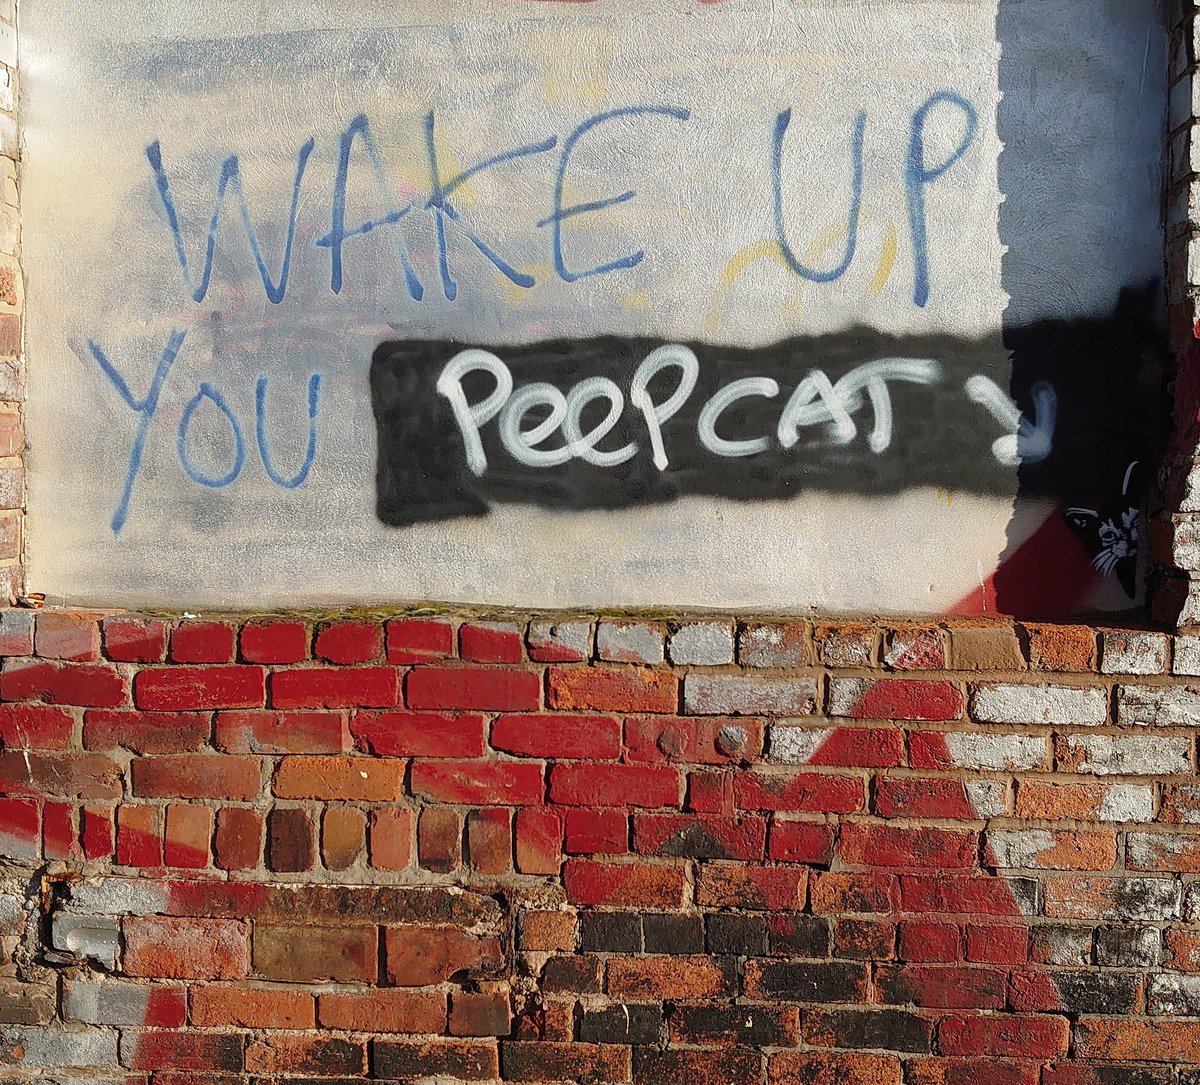 WAKE UP YOU PEEP CAT #StreetArt #fiveweirswalk #sheffield #graffiti #cat